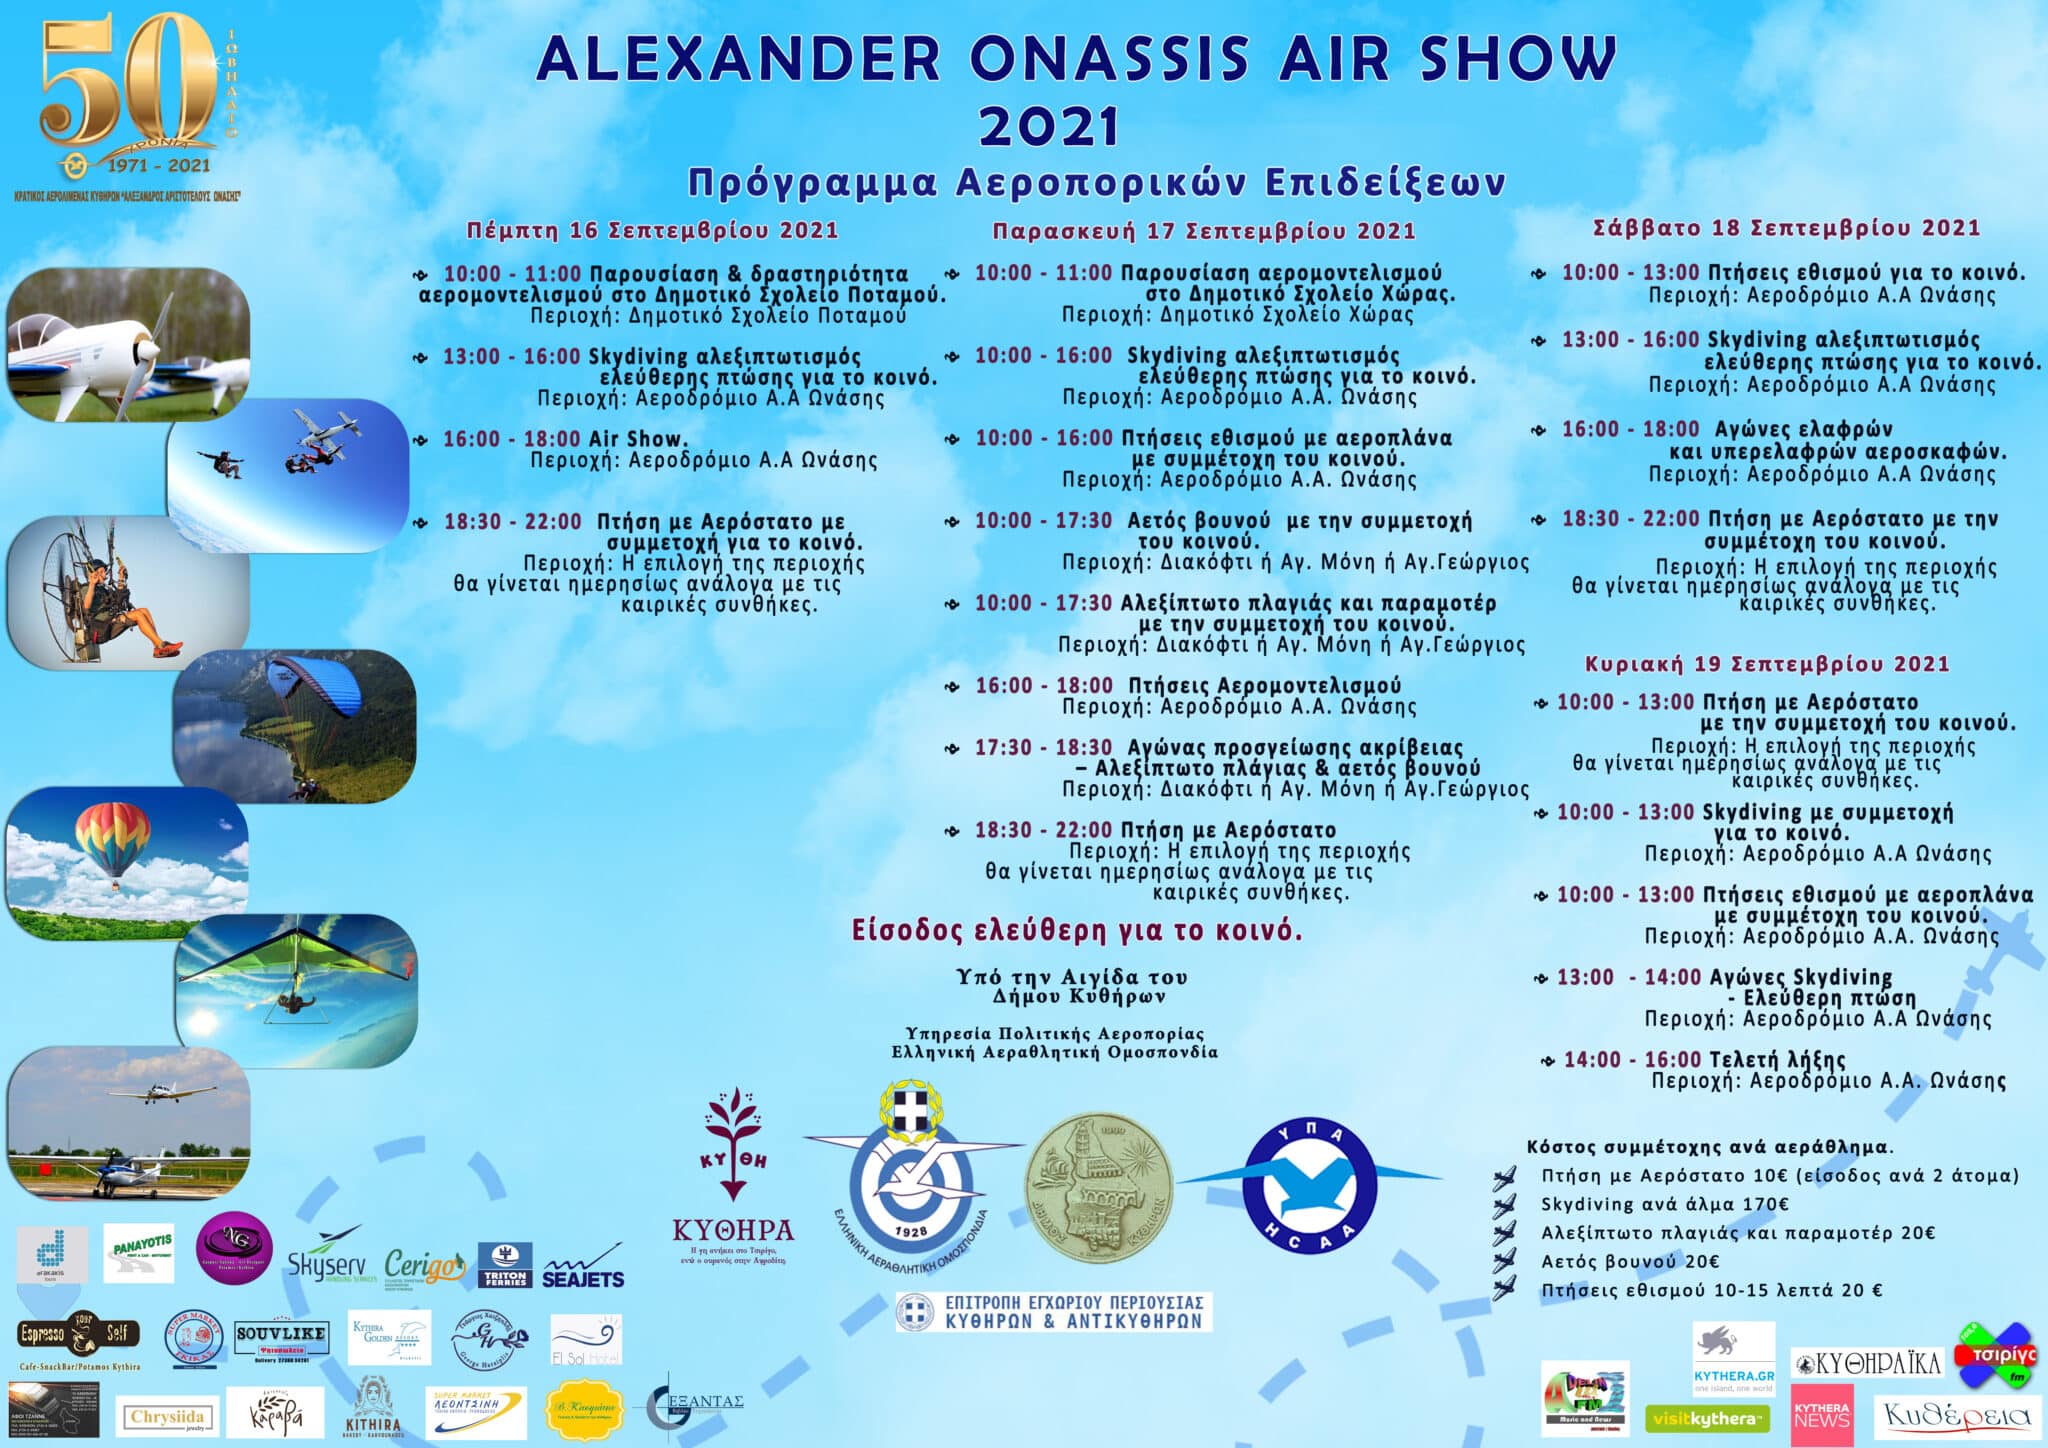 ALEXANDER ONASSIS AIR SHOW 2021- ΠΡΟΓΡΑΜΜΑ ΑΕΡΟΠΟΡΙΚΩΝ ΕΠΙΔΕΙΞΕΩΝ